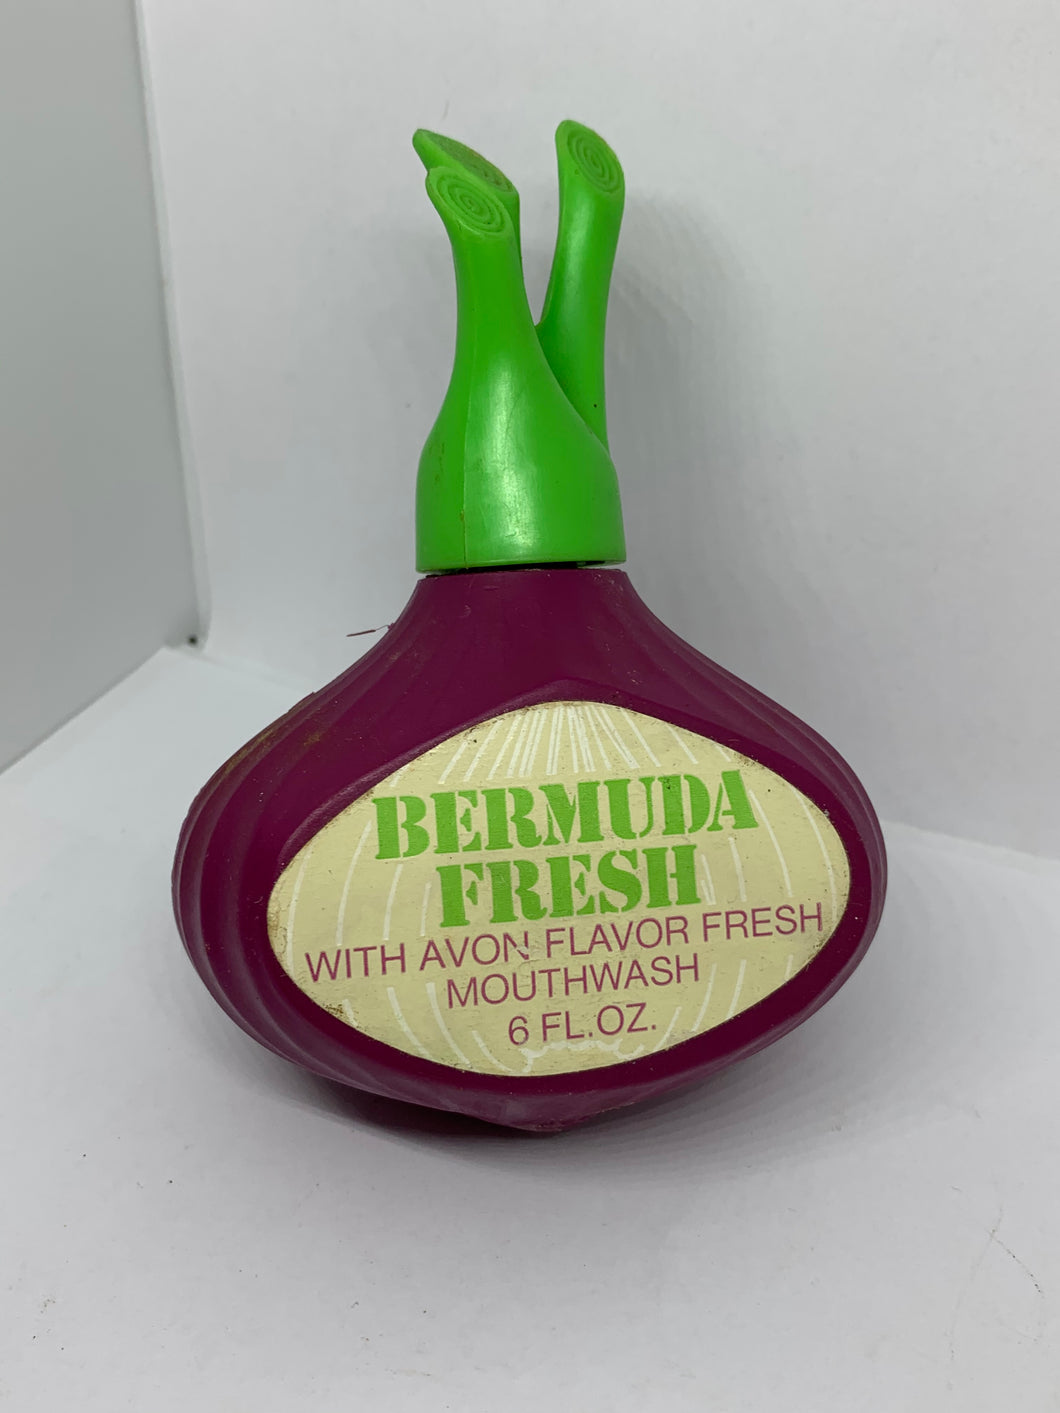 Avon Red Onion Bermuda Fresh Mouthwash Plastic Bottle Vintage Empty